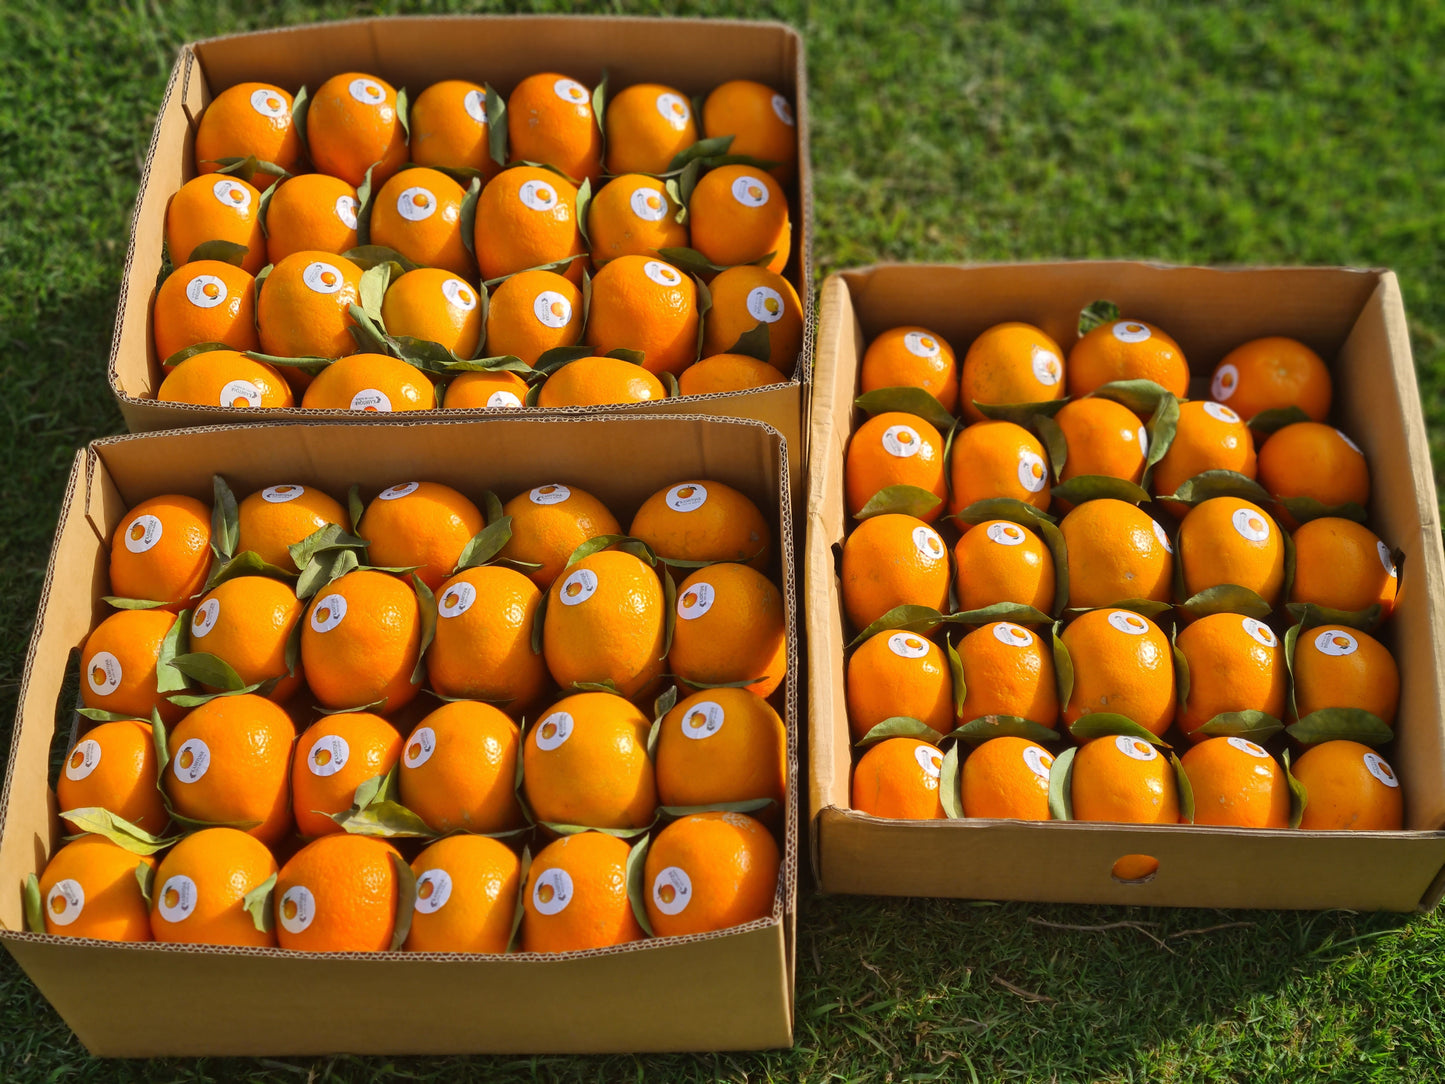 Oranges(kinnow)